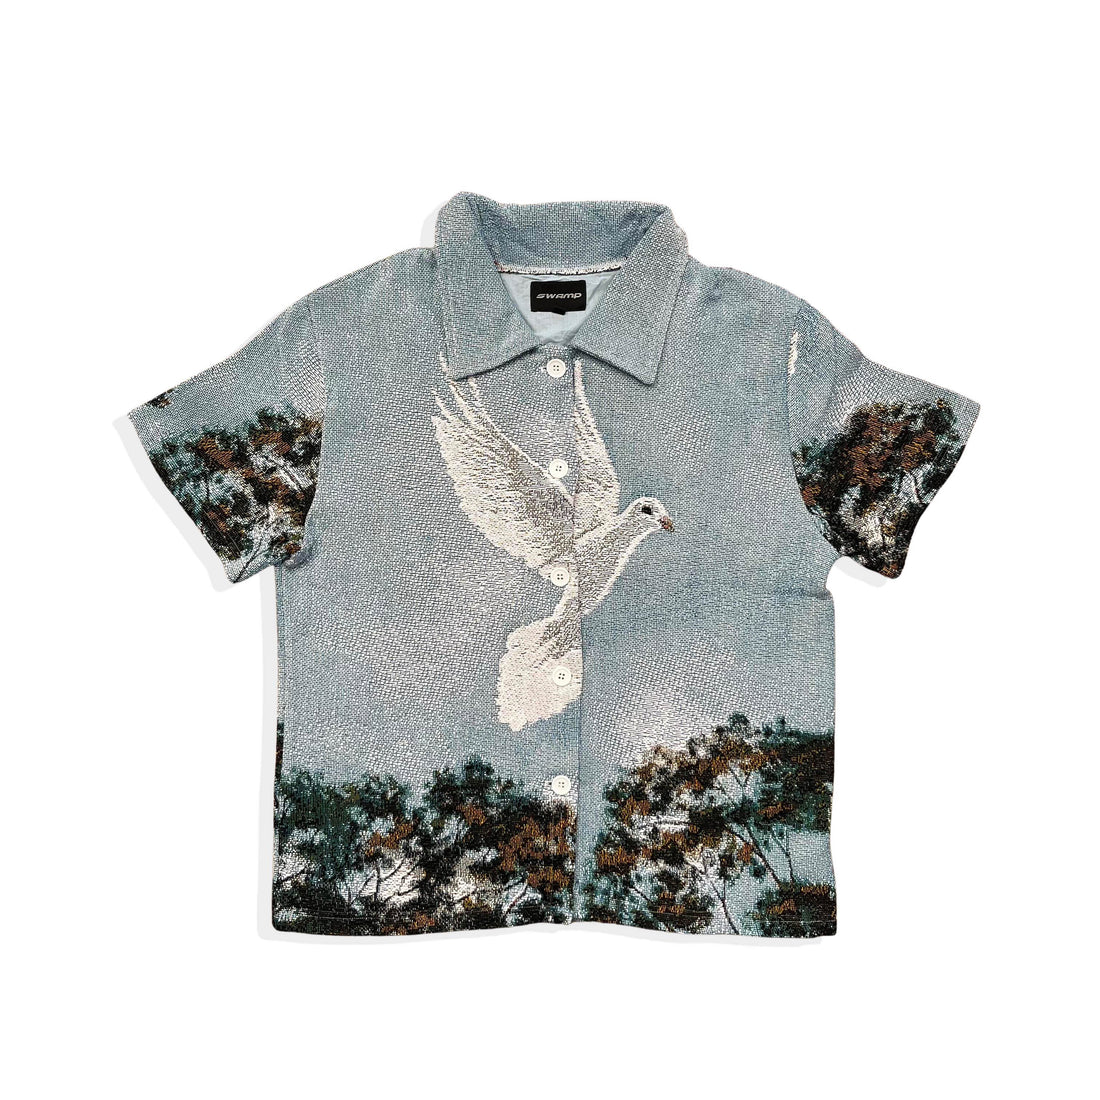 'Dove' Button Up Shirt